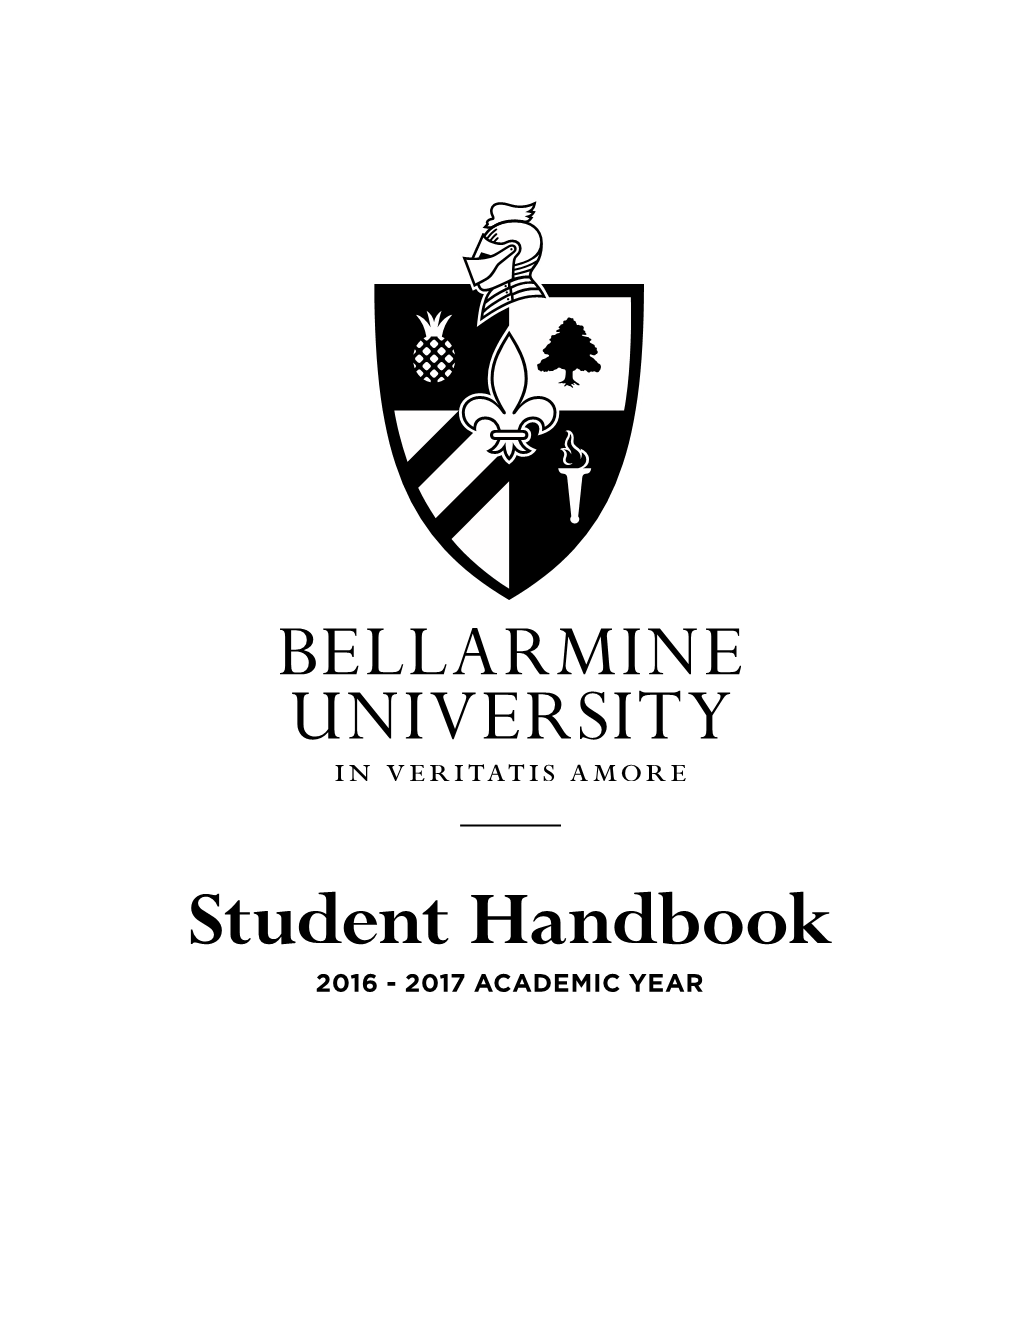 Student Handbook 2016 - 2017 Academic Year